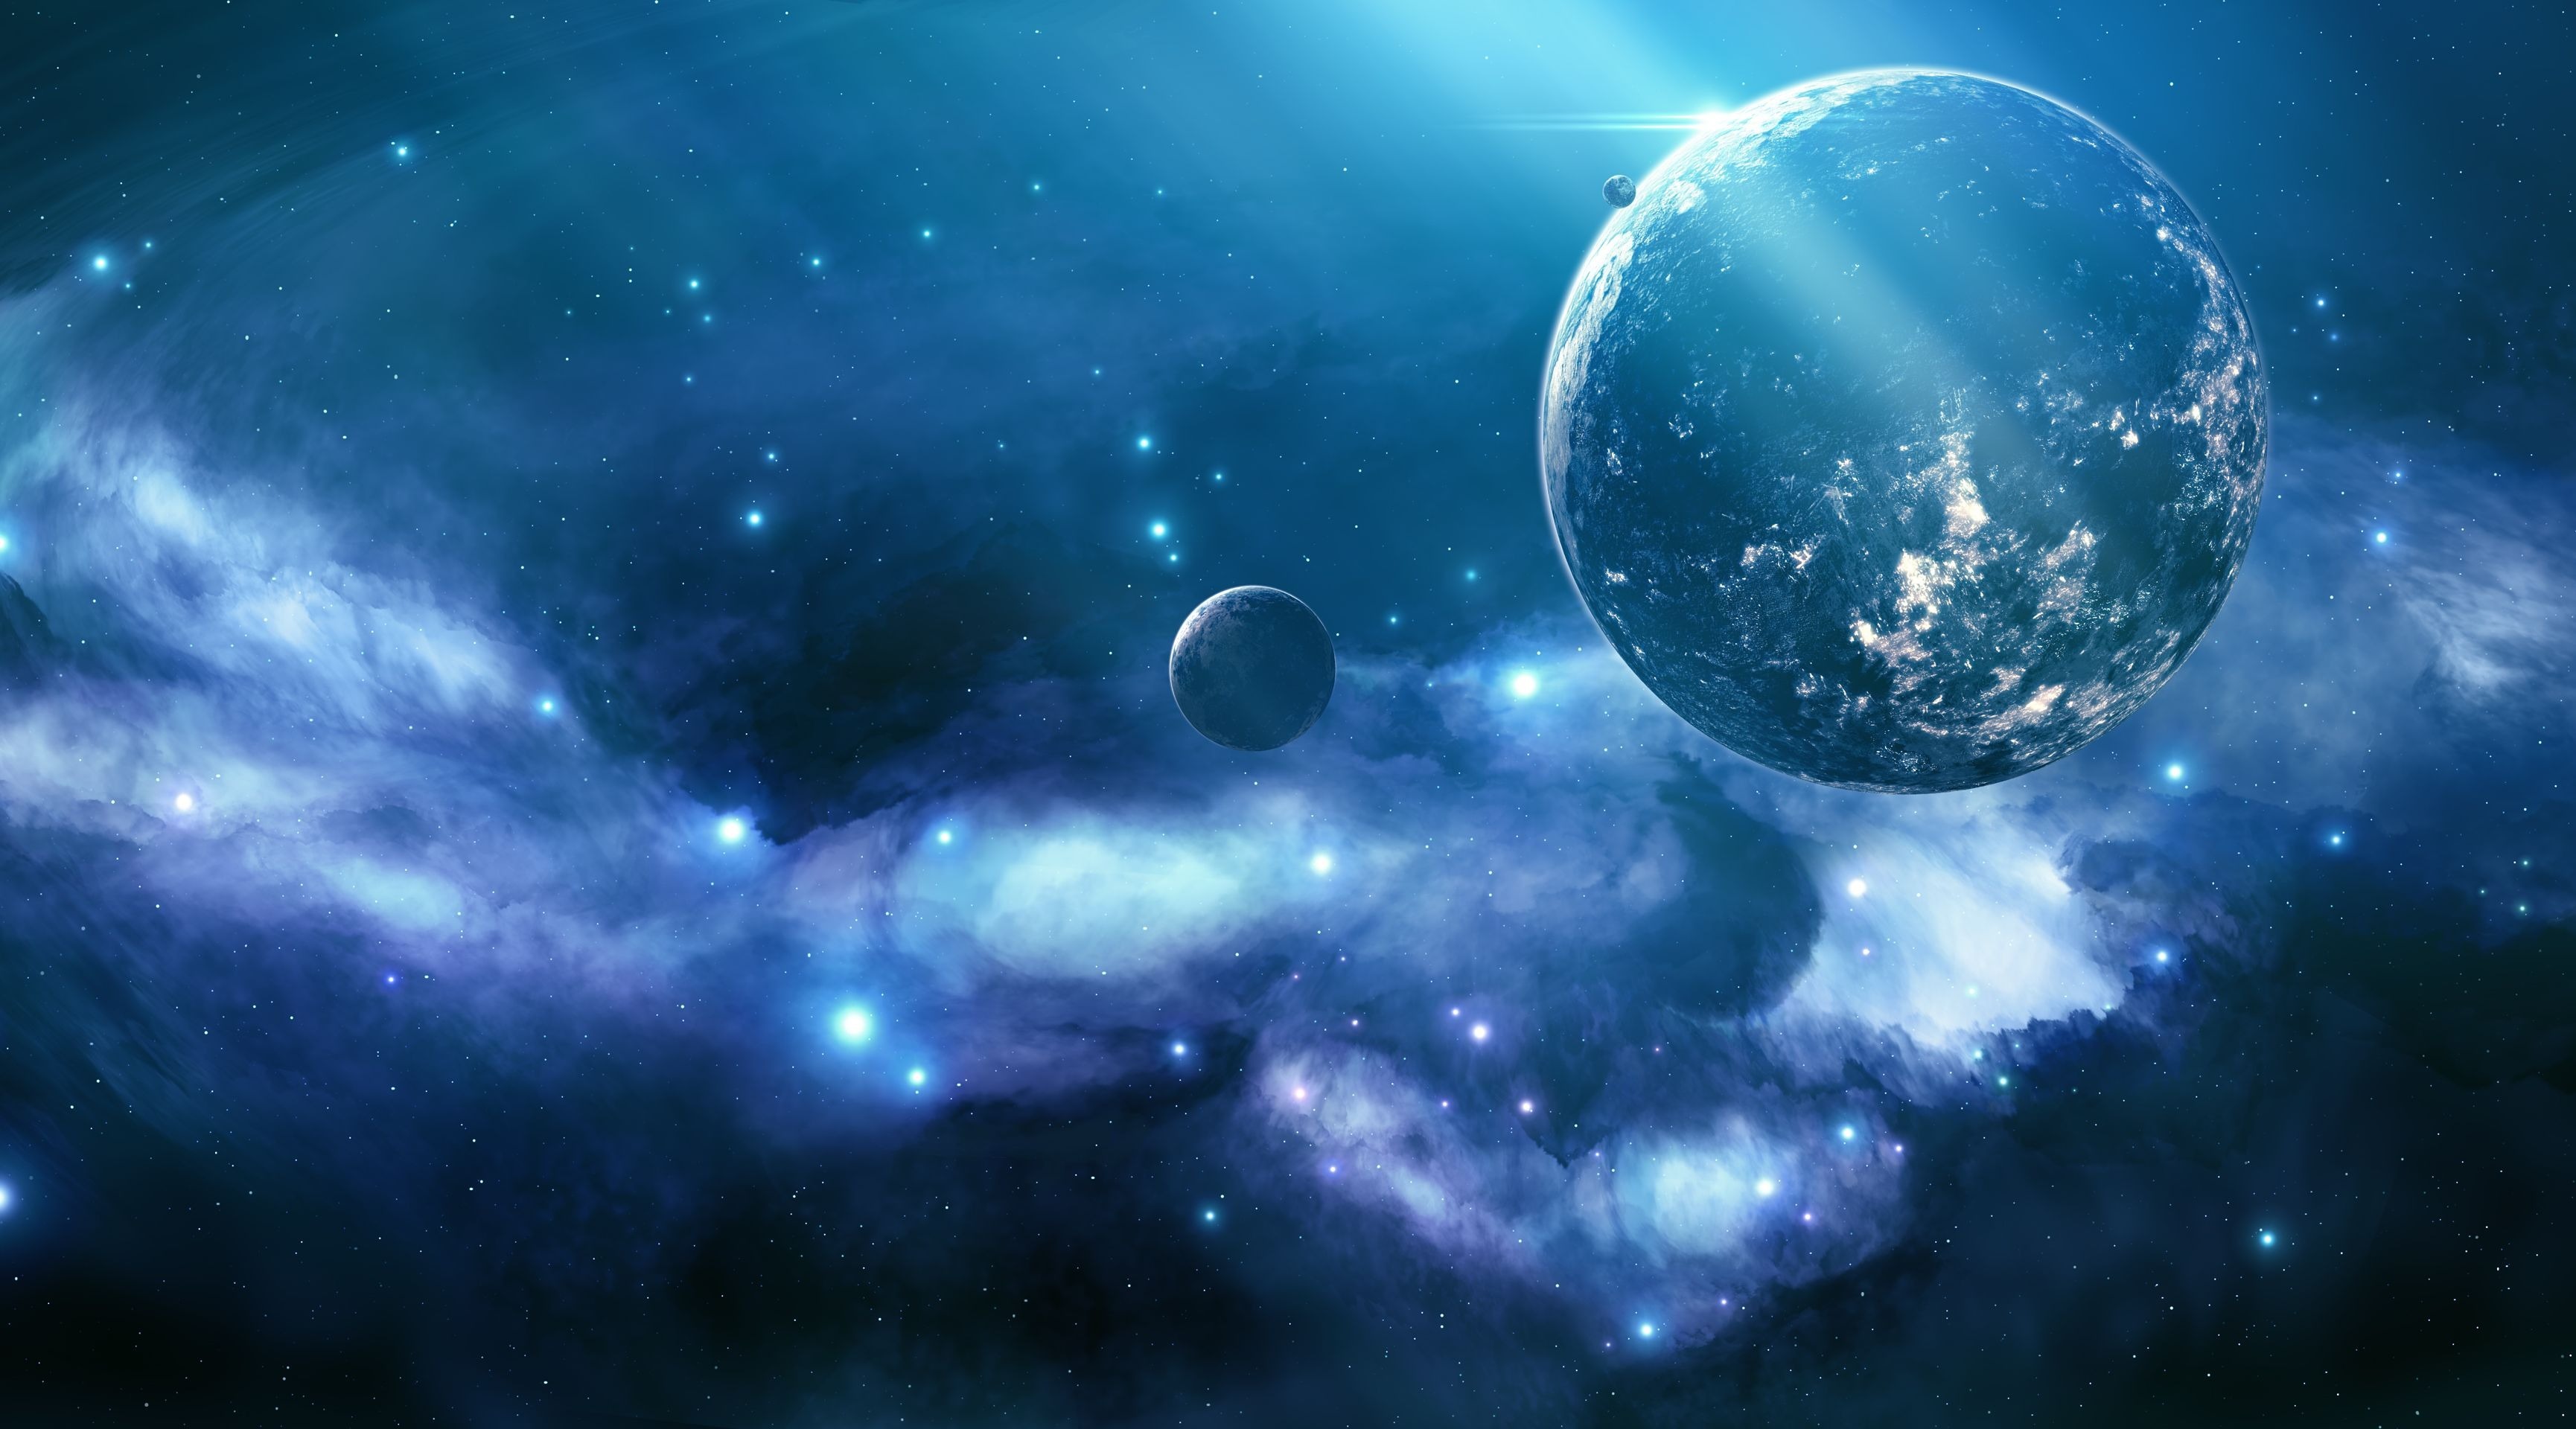 planets, sci fi Image for desktop